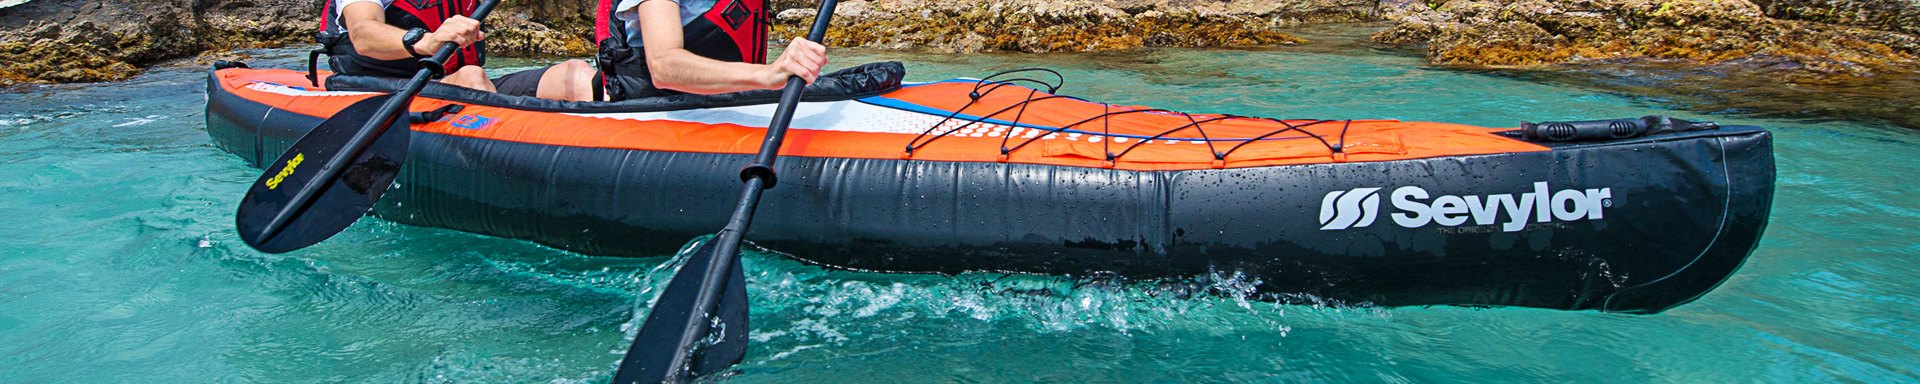 Sevylor Inflatable Boats & Parts